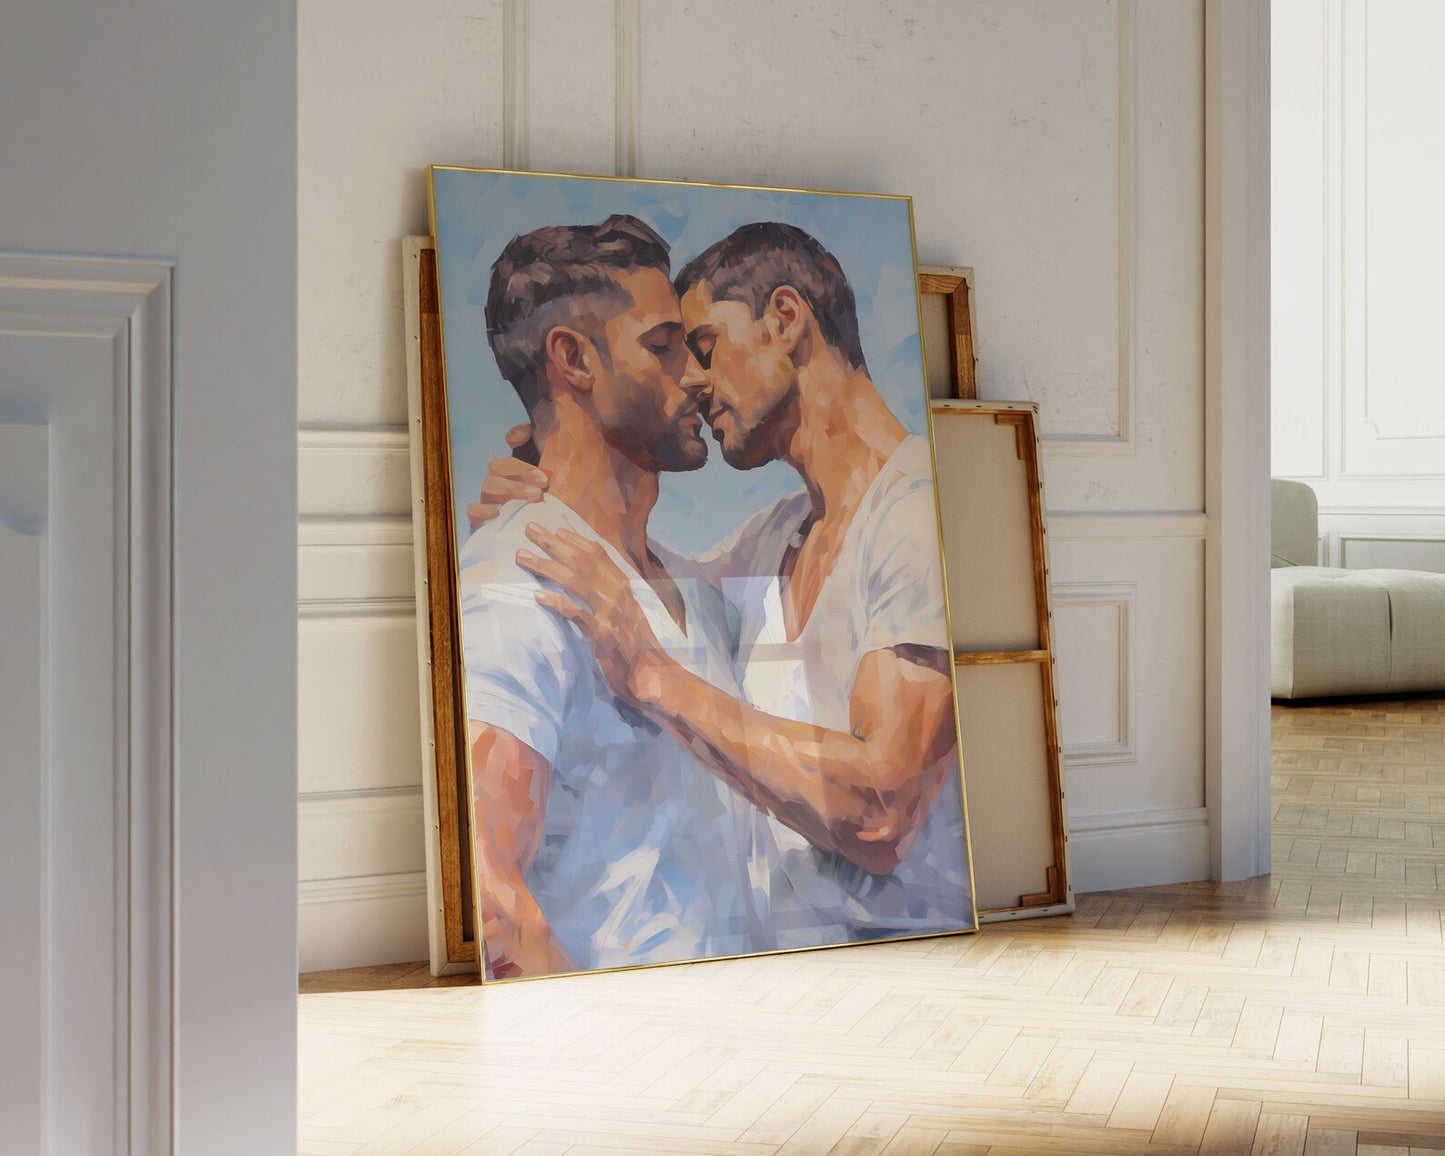 Habeeb | Gay Art, Gay Couple, Home Decor, Art Print Poster